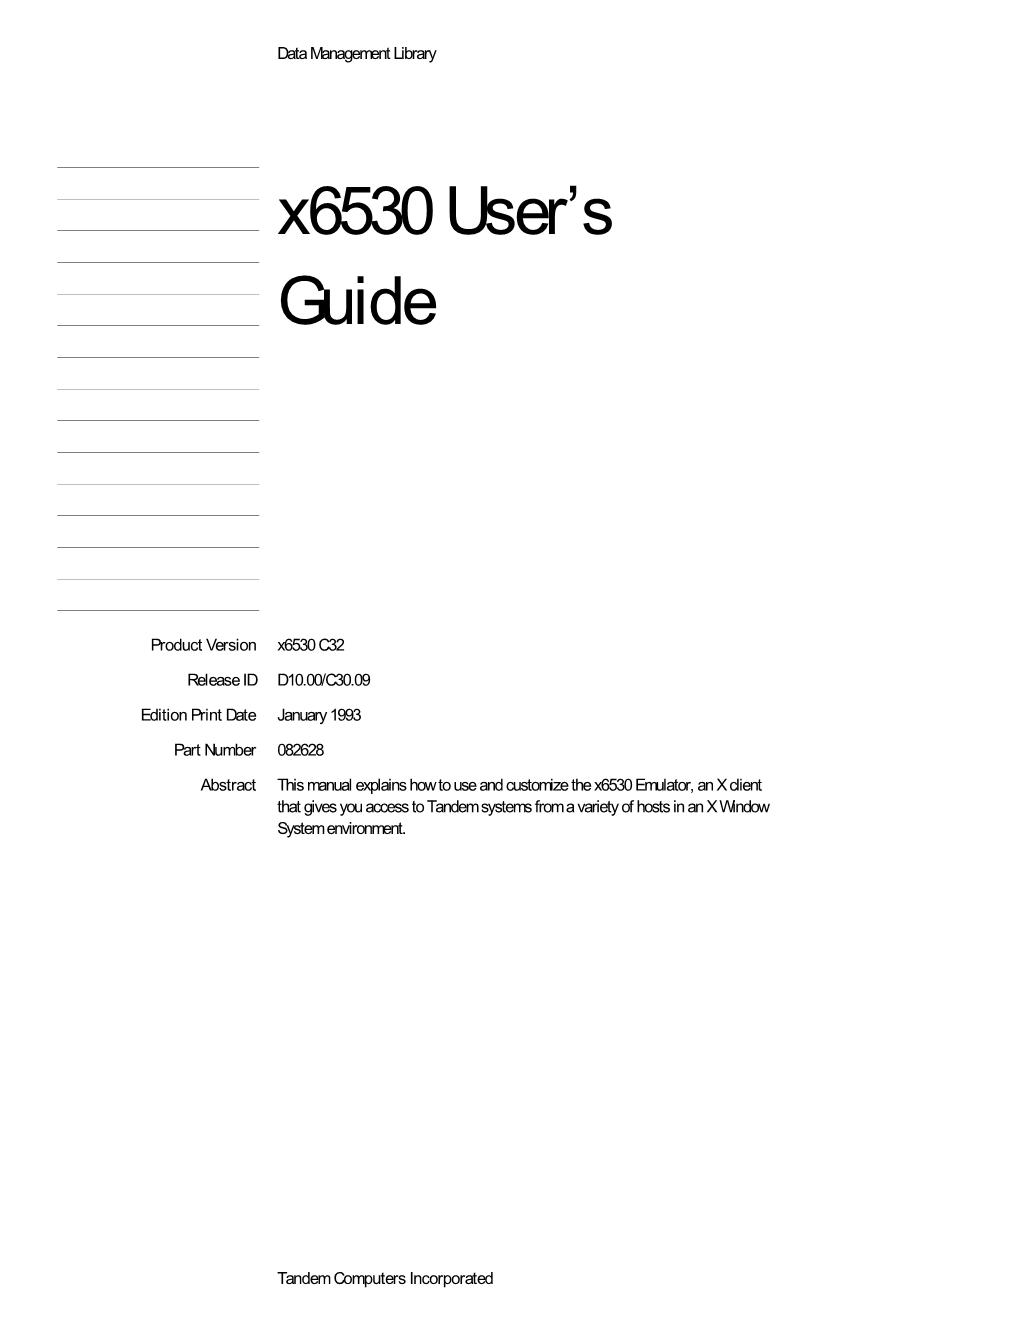 X6530 User's Guide